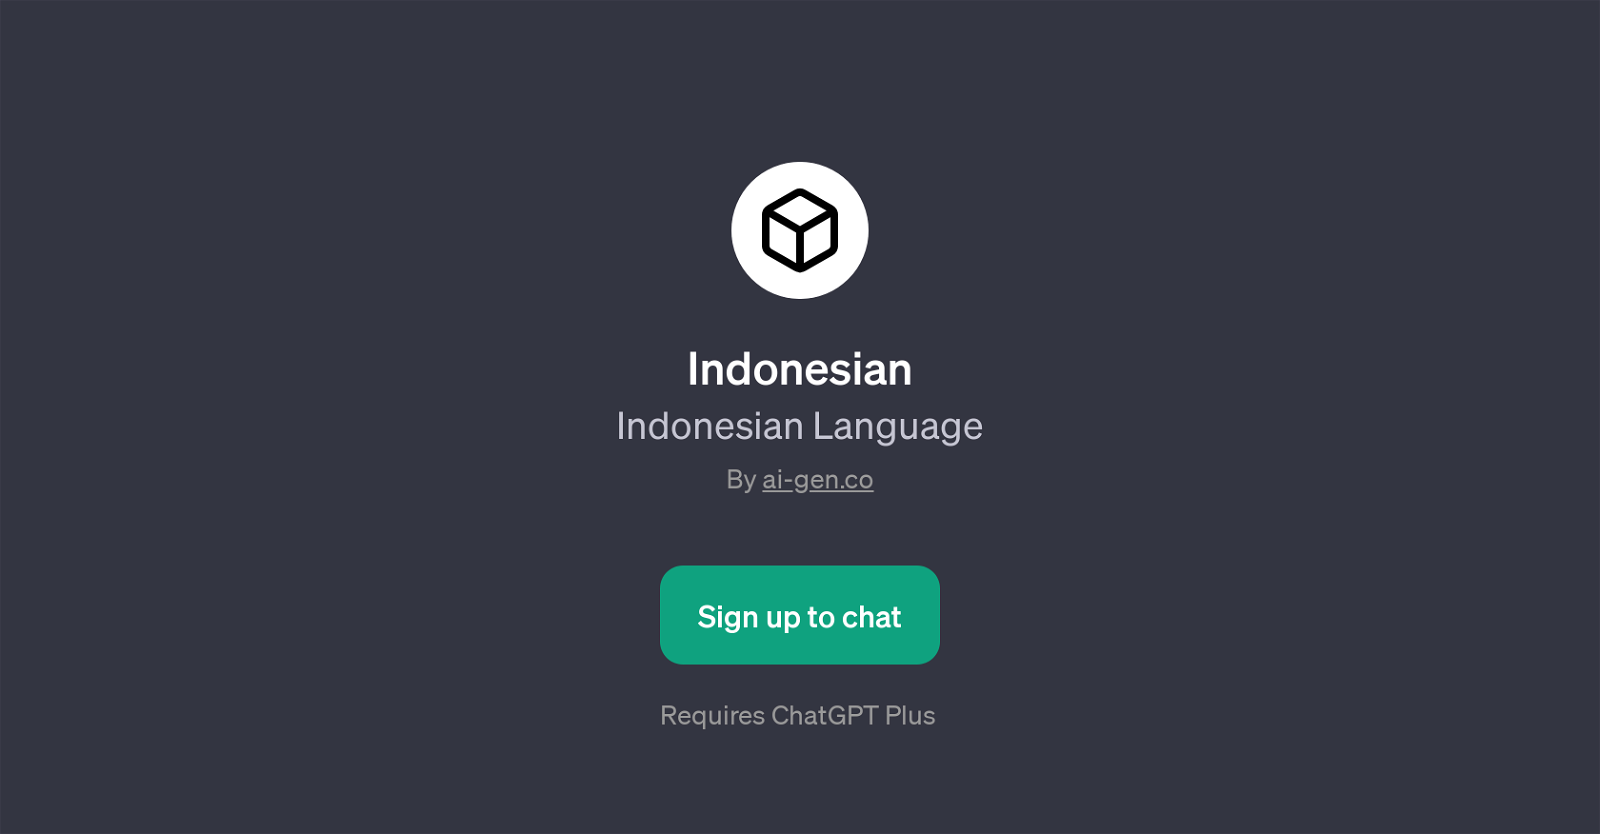 IndonesianPage website